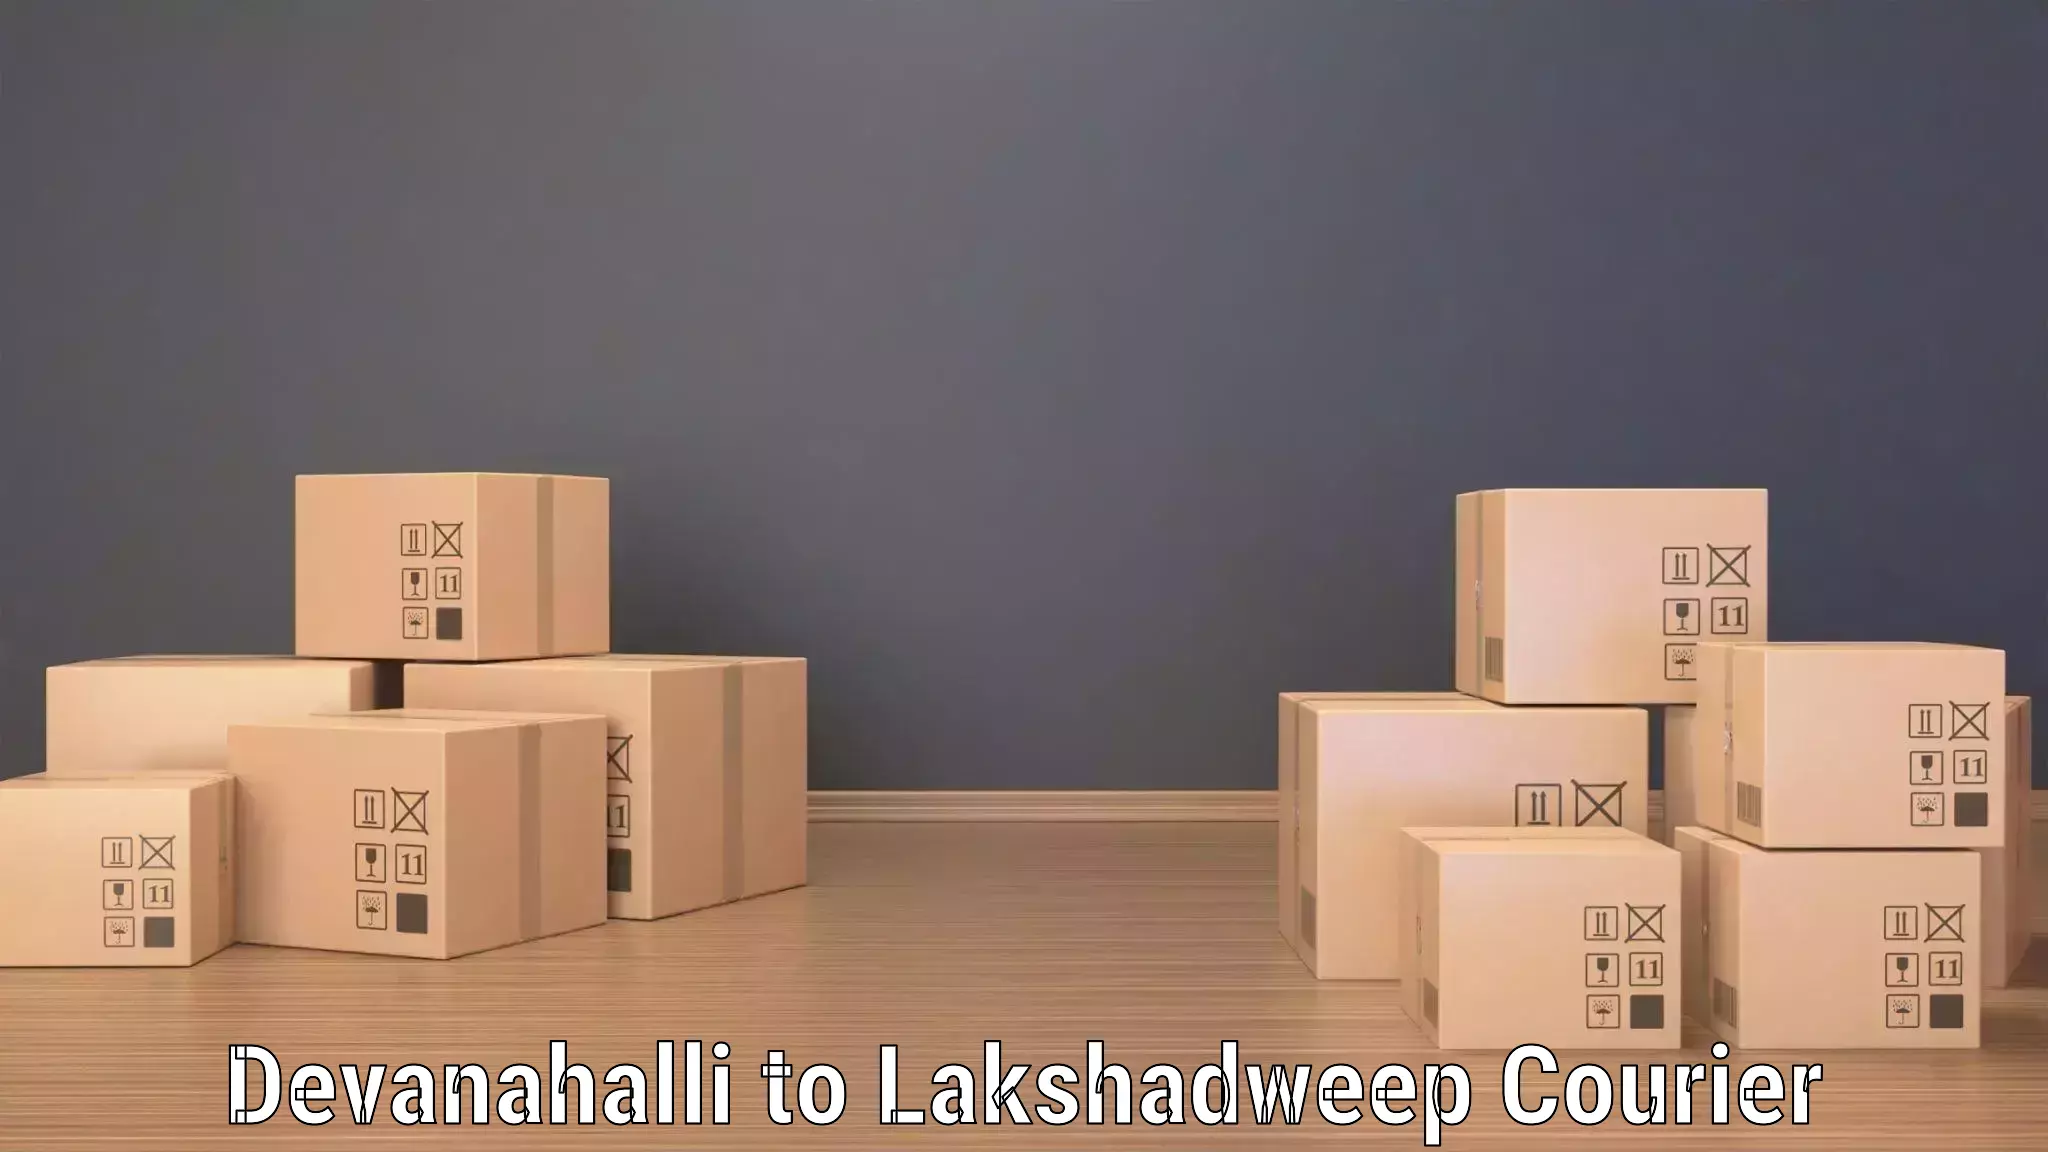 Courier app Devanahalli to Lakshadweep